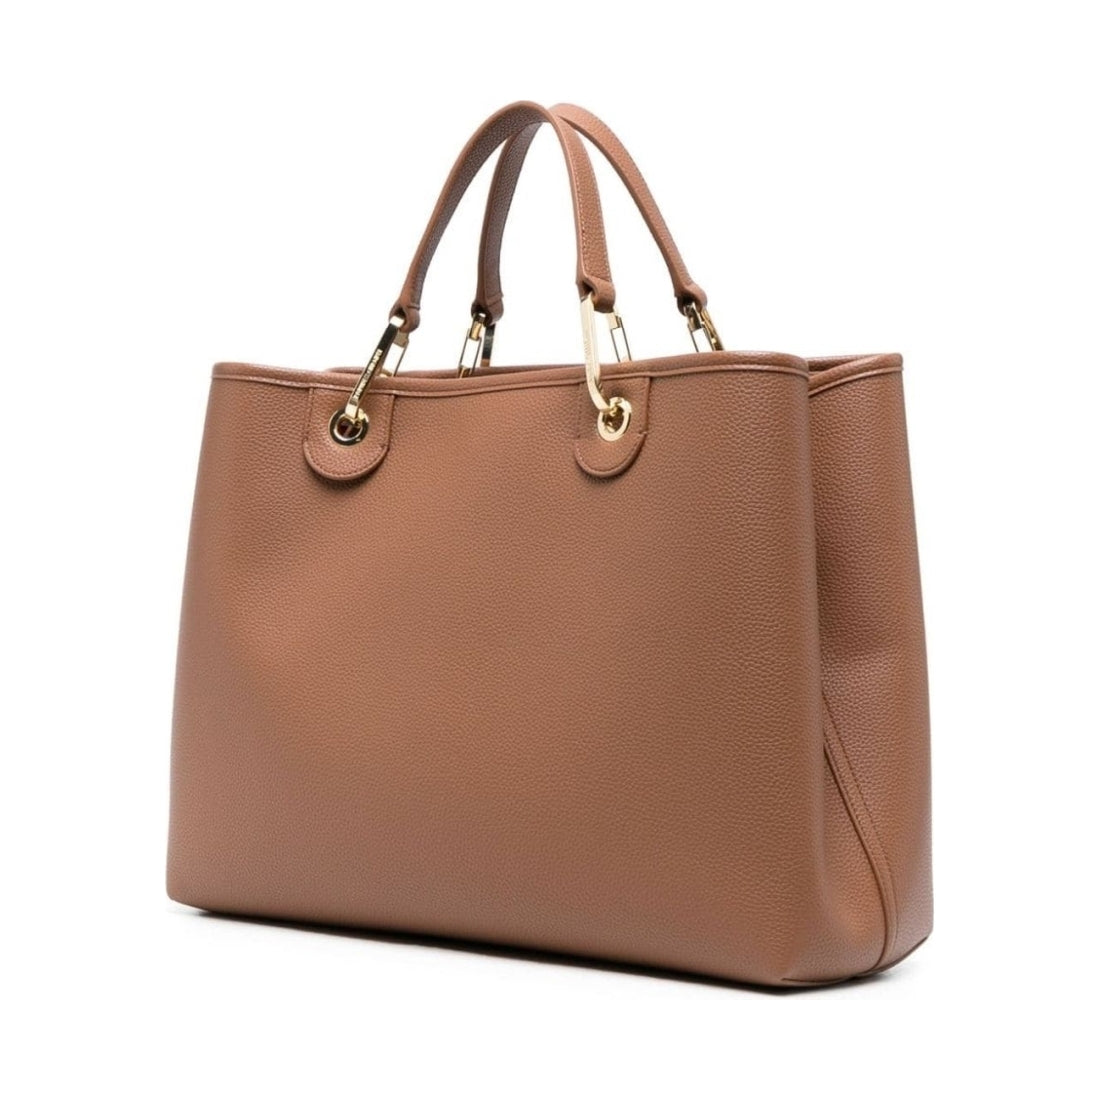 Emporio Armani womens legno geraneo casual shopping bag | Vilbury London